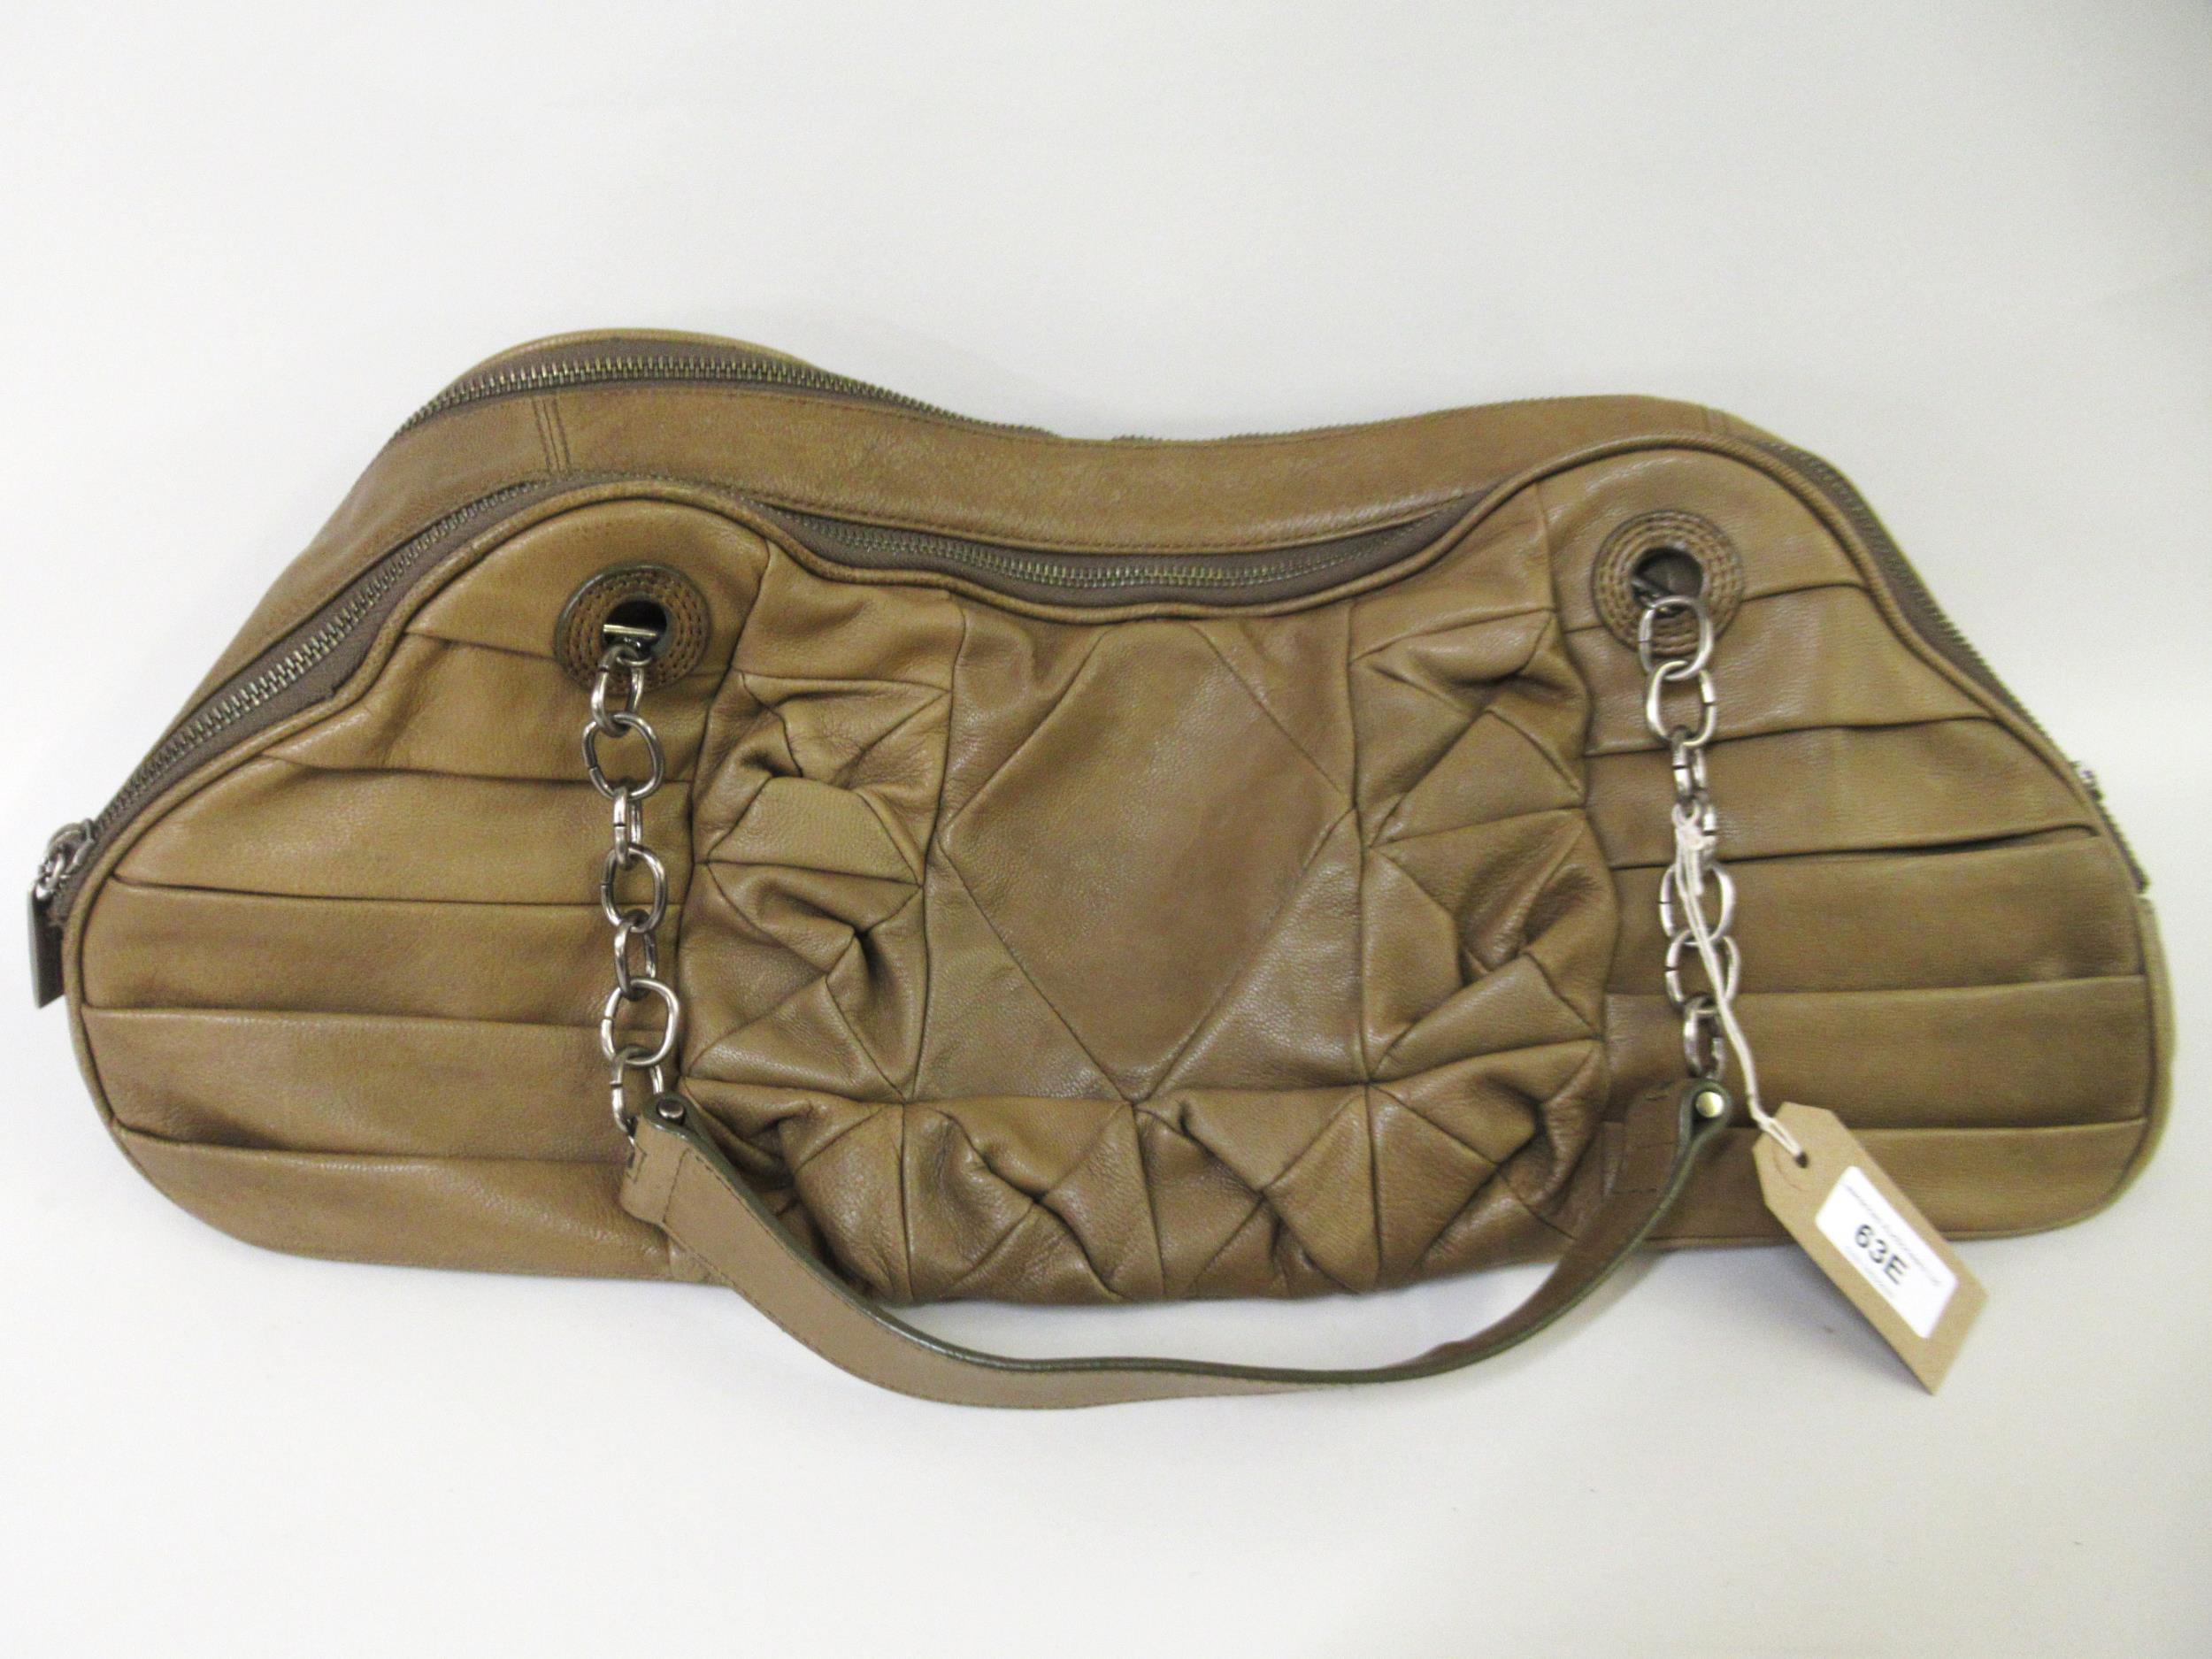 BCBG Max Azria, large green leather shoulder bag One zip tag missing